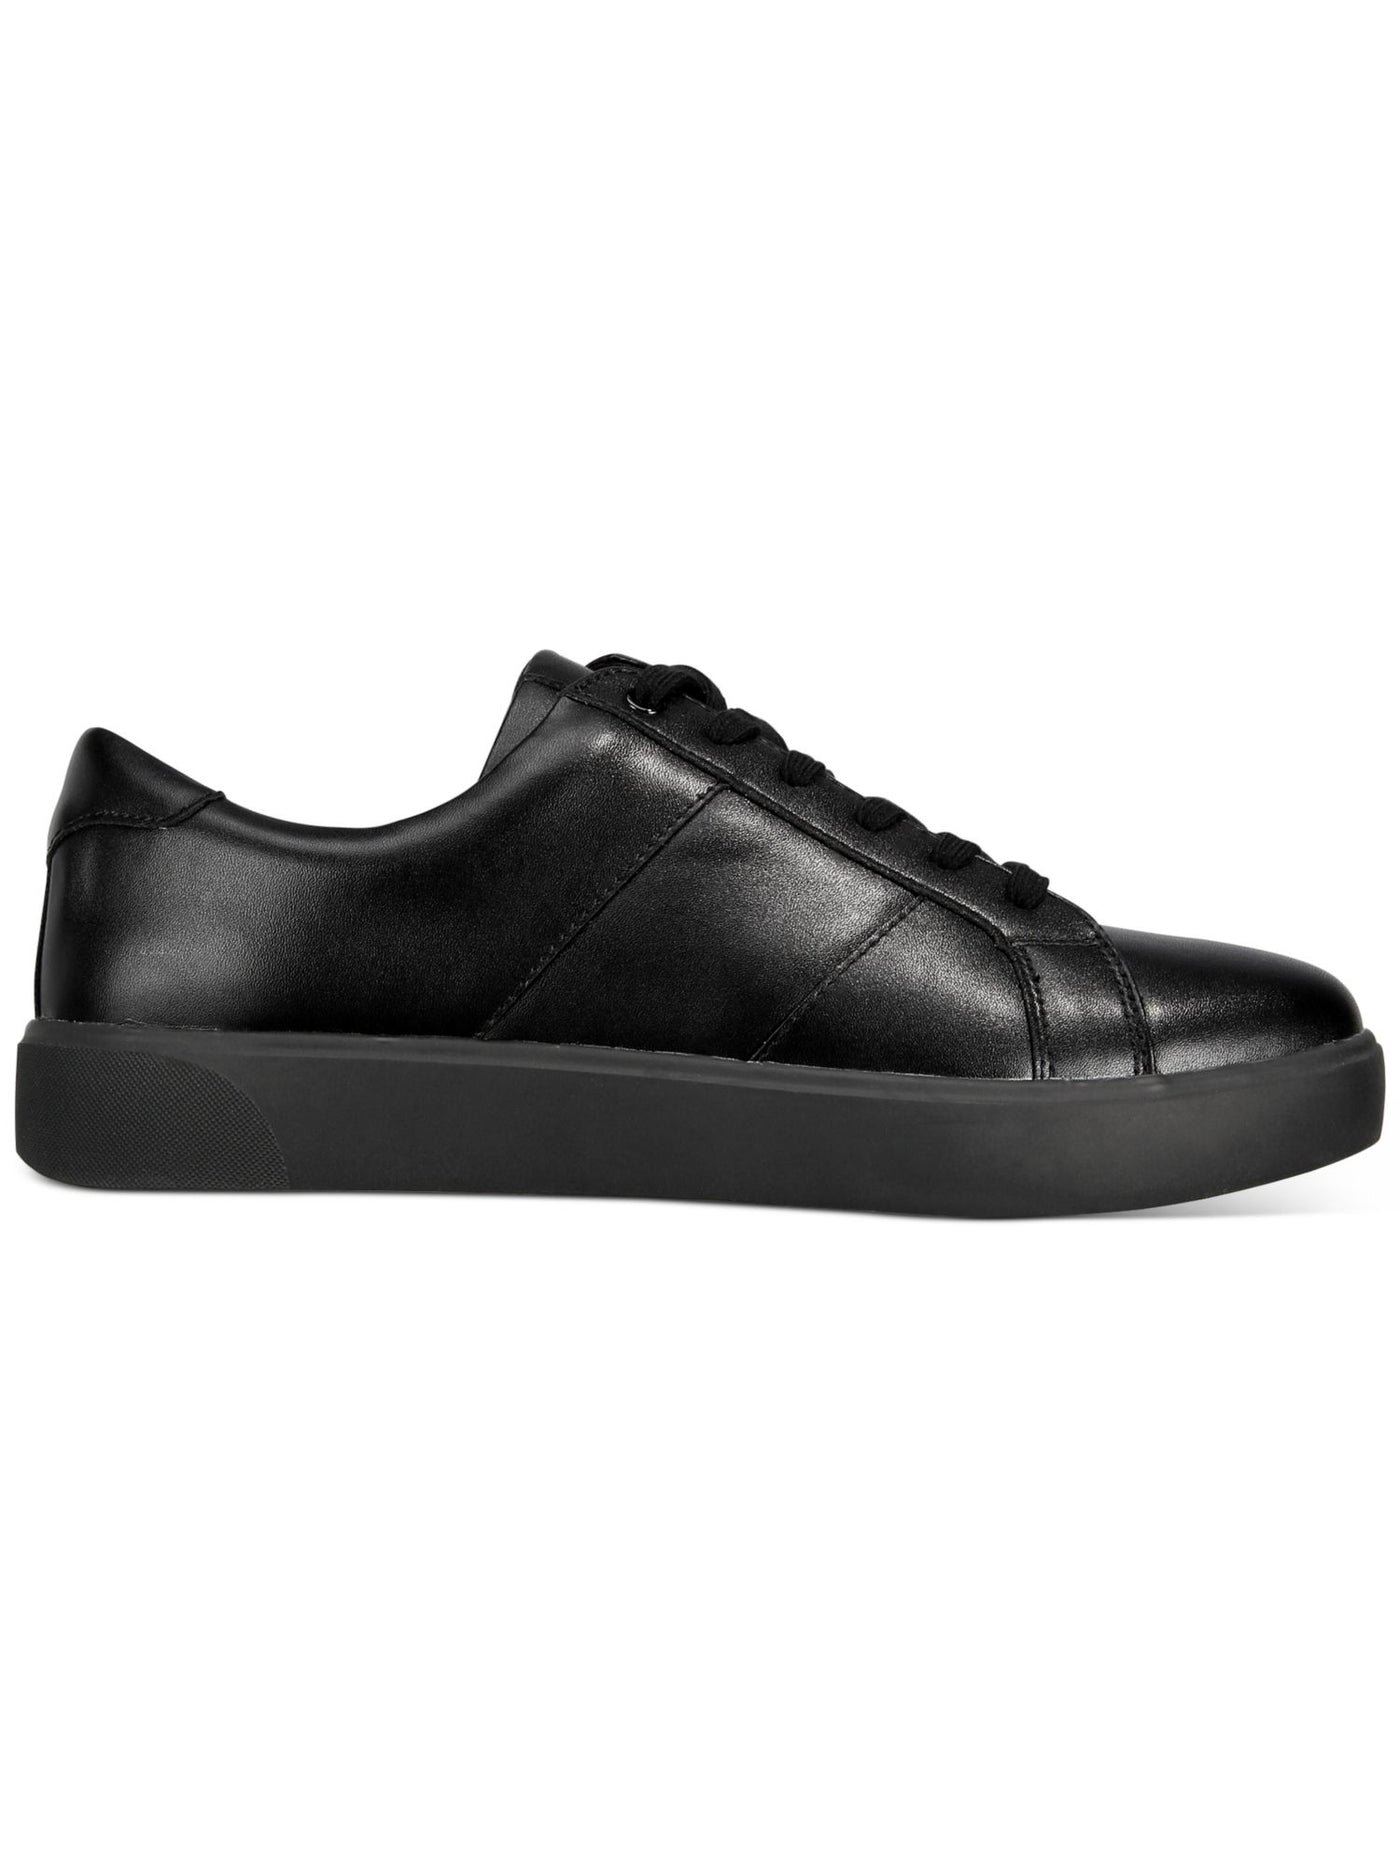 INC Mens Black Comfort Ezra Round Toe Platform Lace-Up Sneakers Shoes 9 M